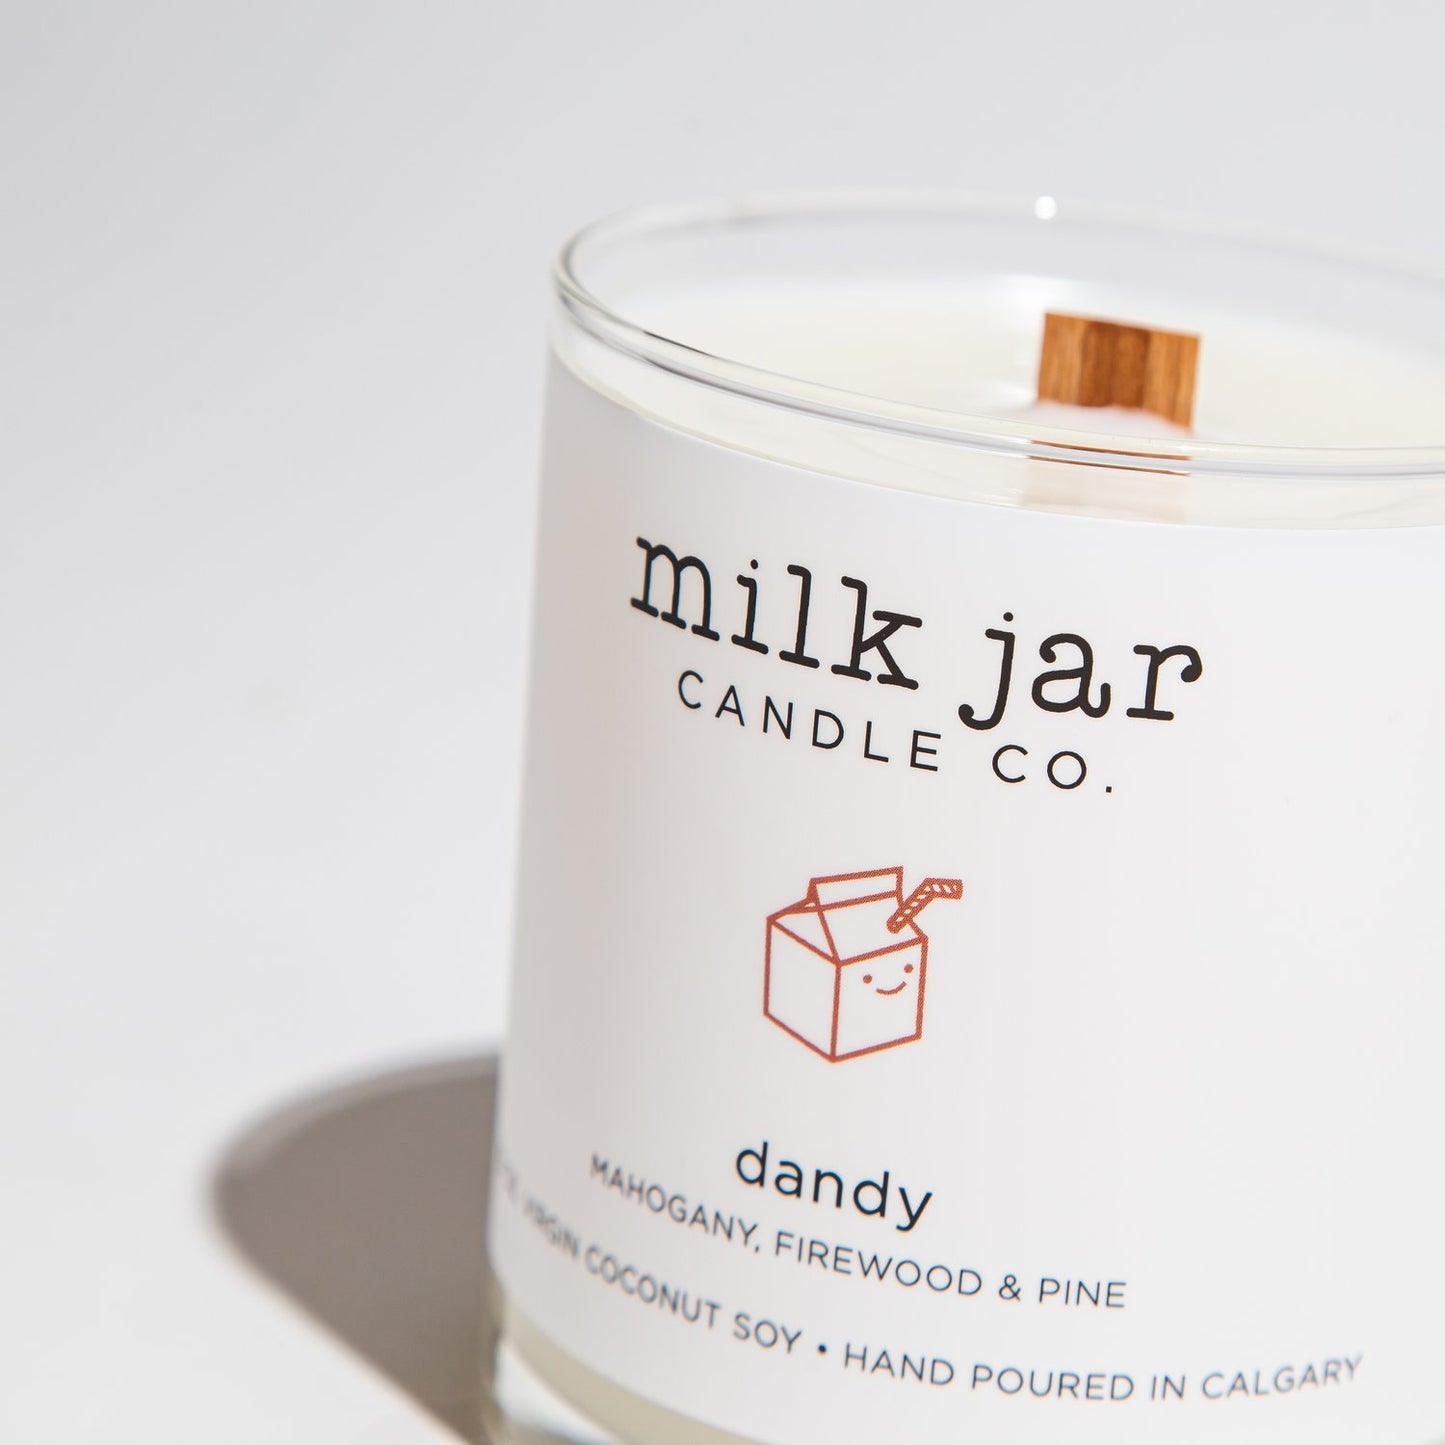 Milk Jar Candle Co / Dandy